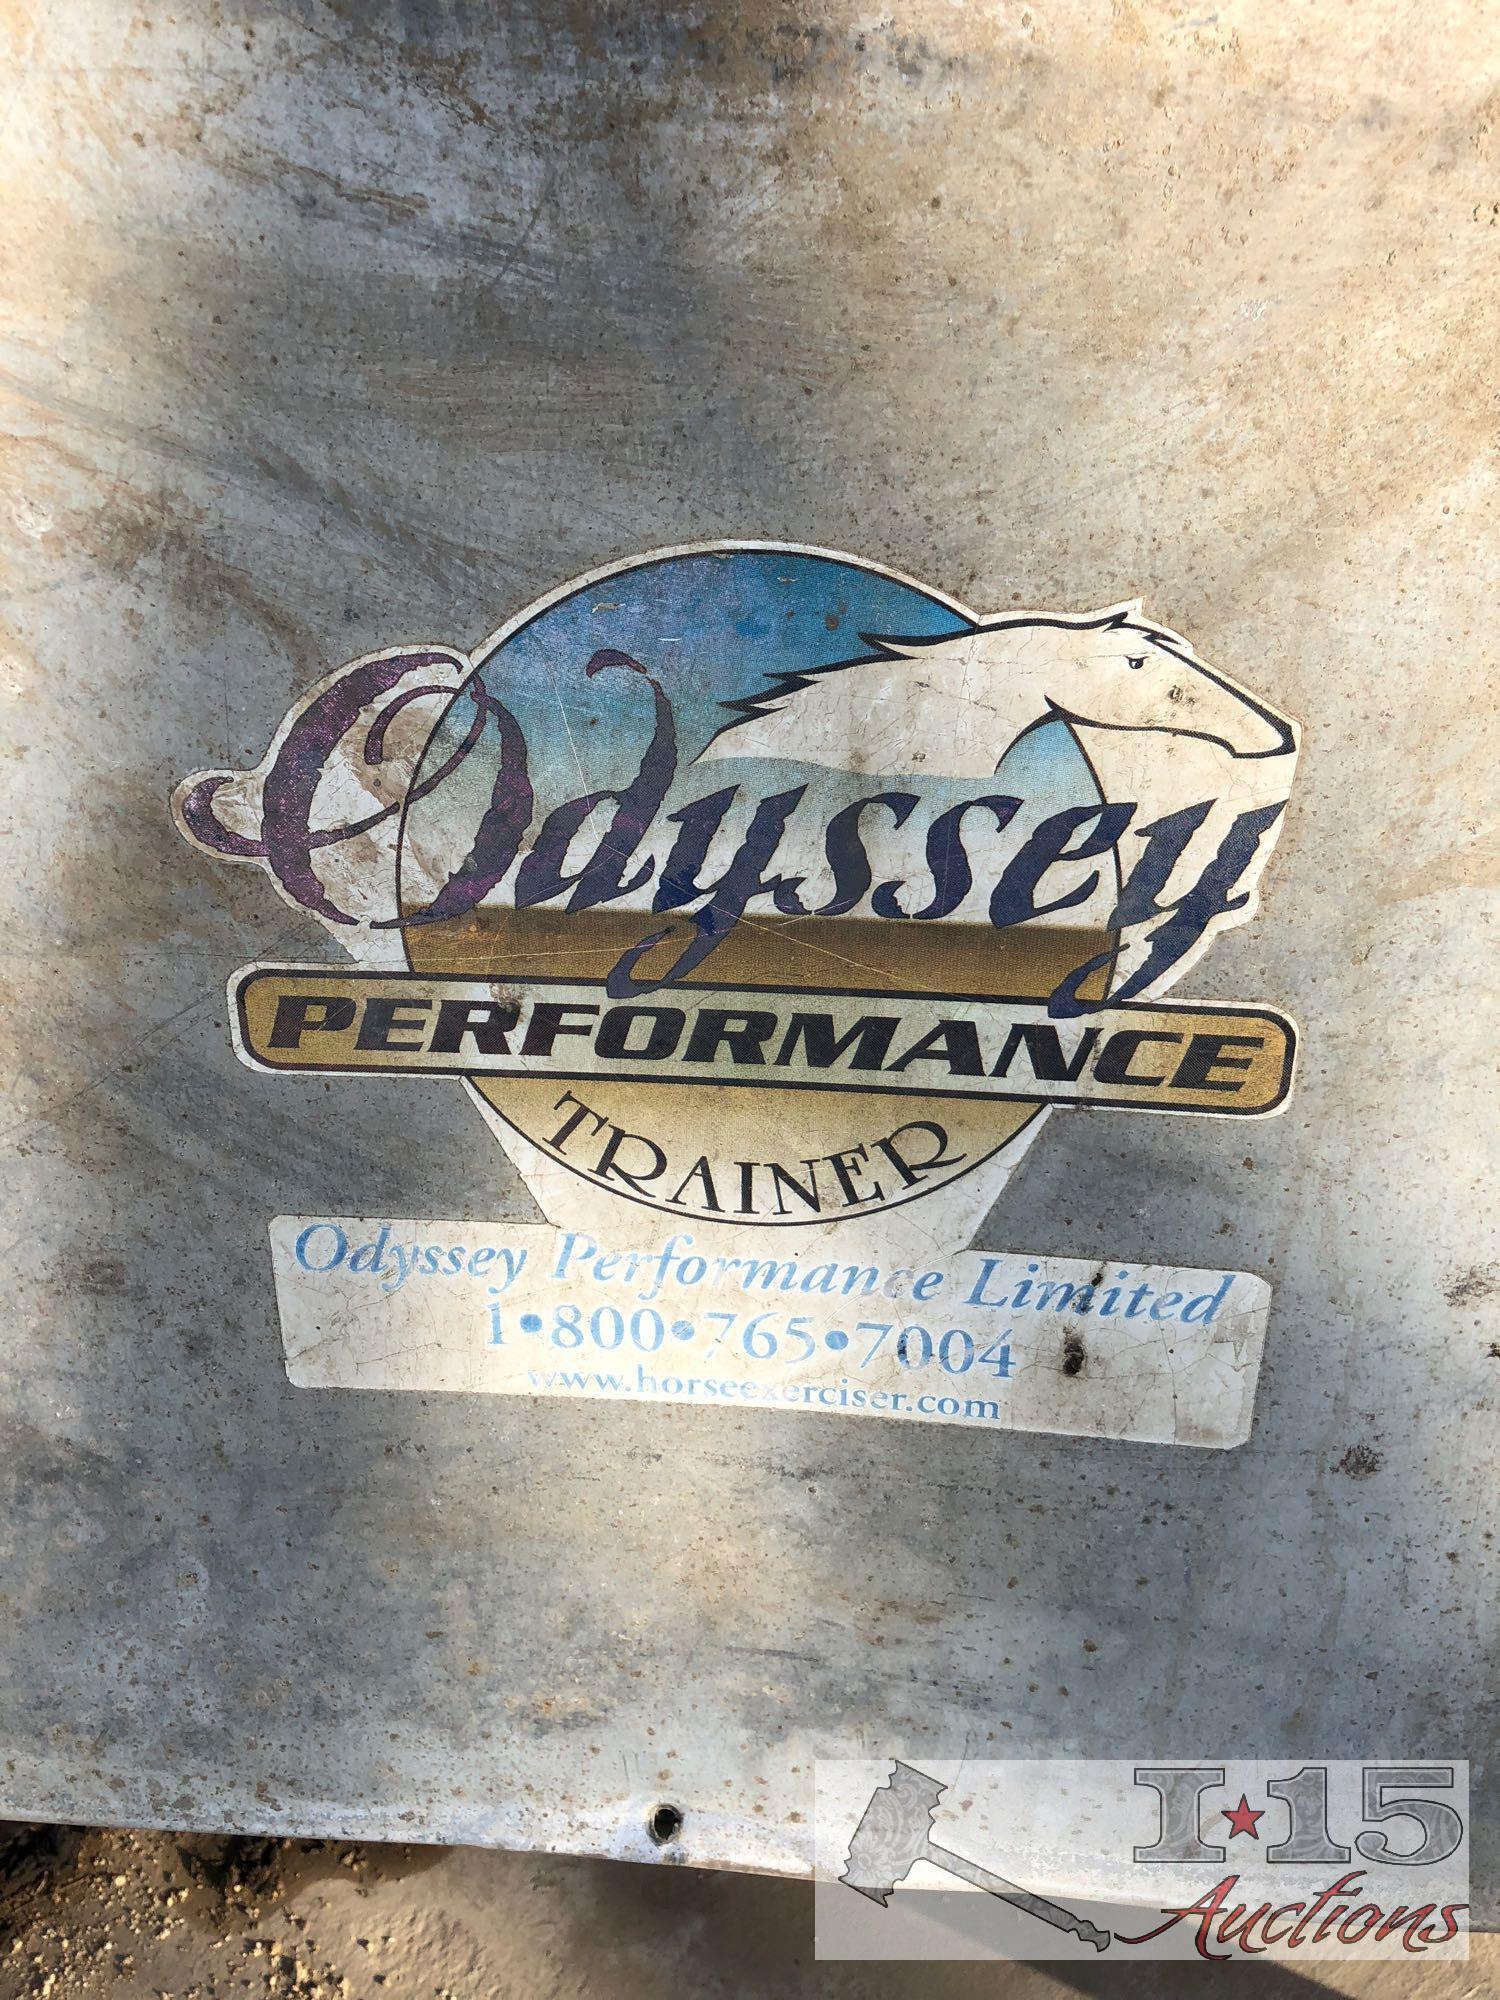 Odyssey performance 8 horse trainer 65ft diameter Euroxciser